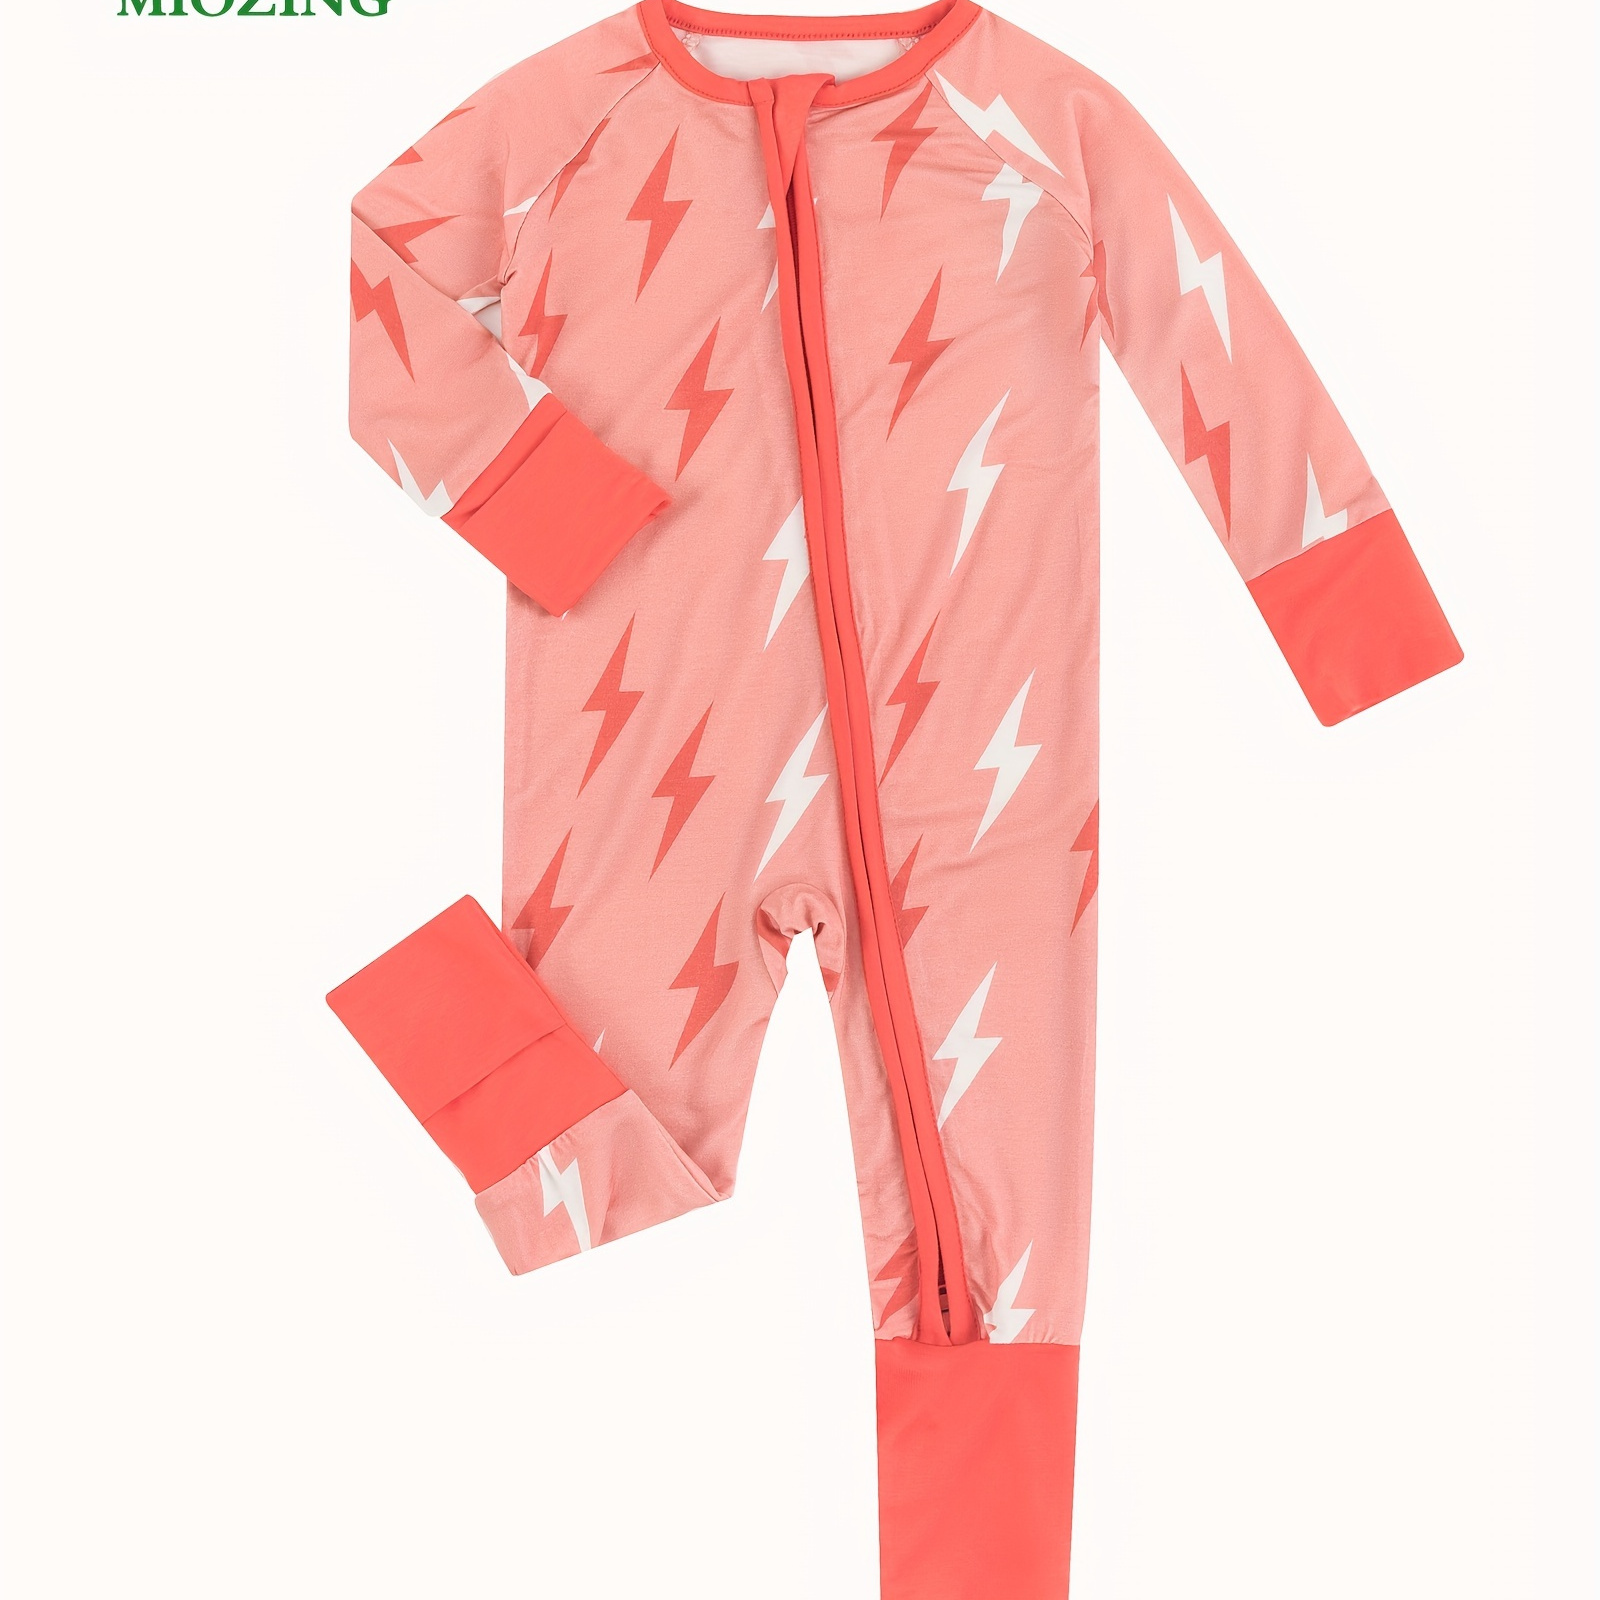 

Miozing Baby's Lightning Pattern Comfy Bamboo Fiber Zip Up Long Sleeve Romper, Toddler & Infant Girl's Bodysuit